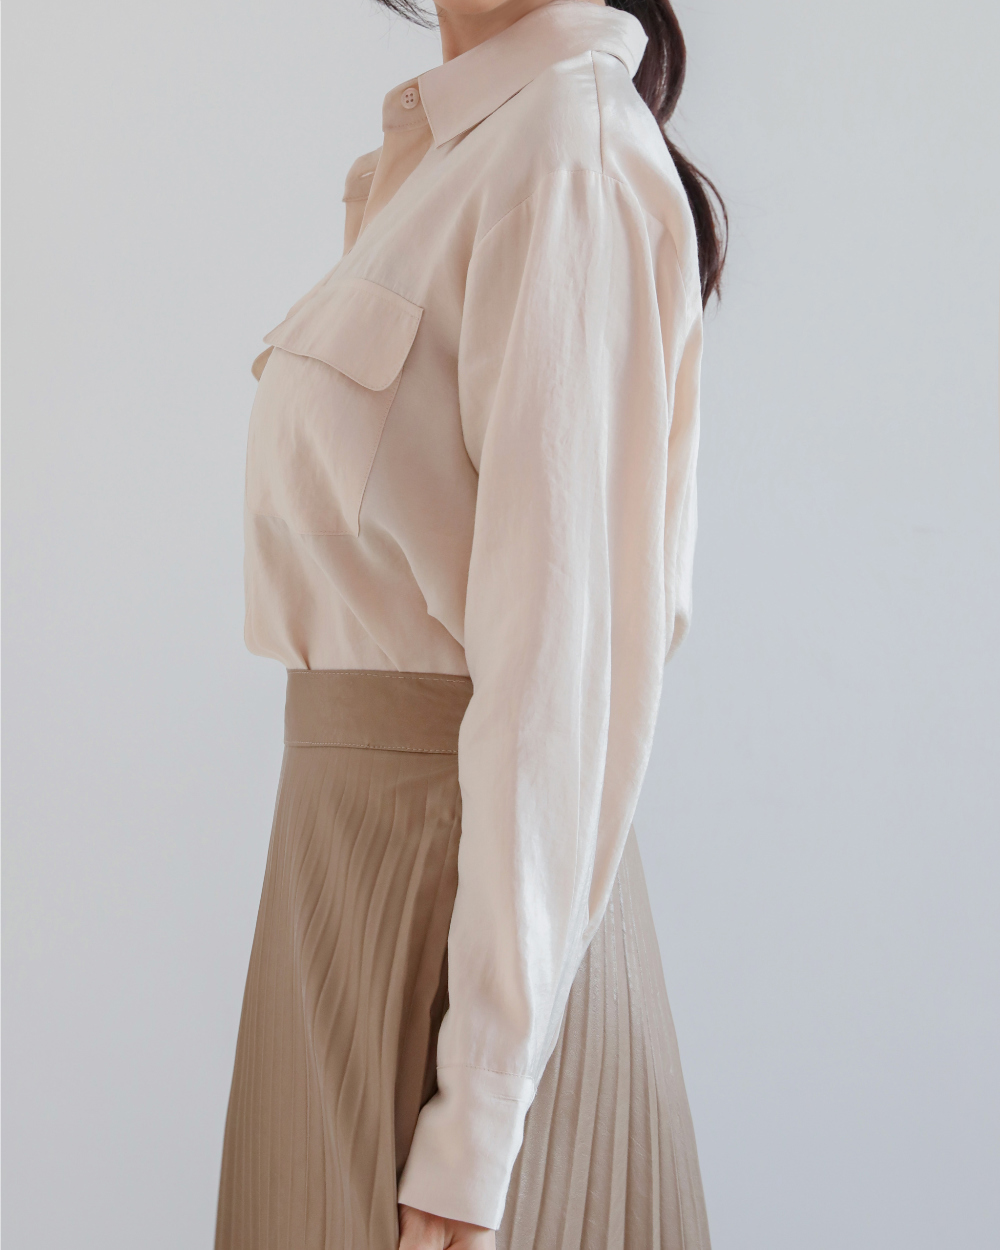 blouse model image-S7L7